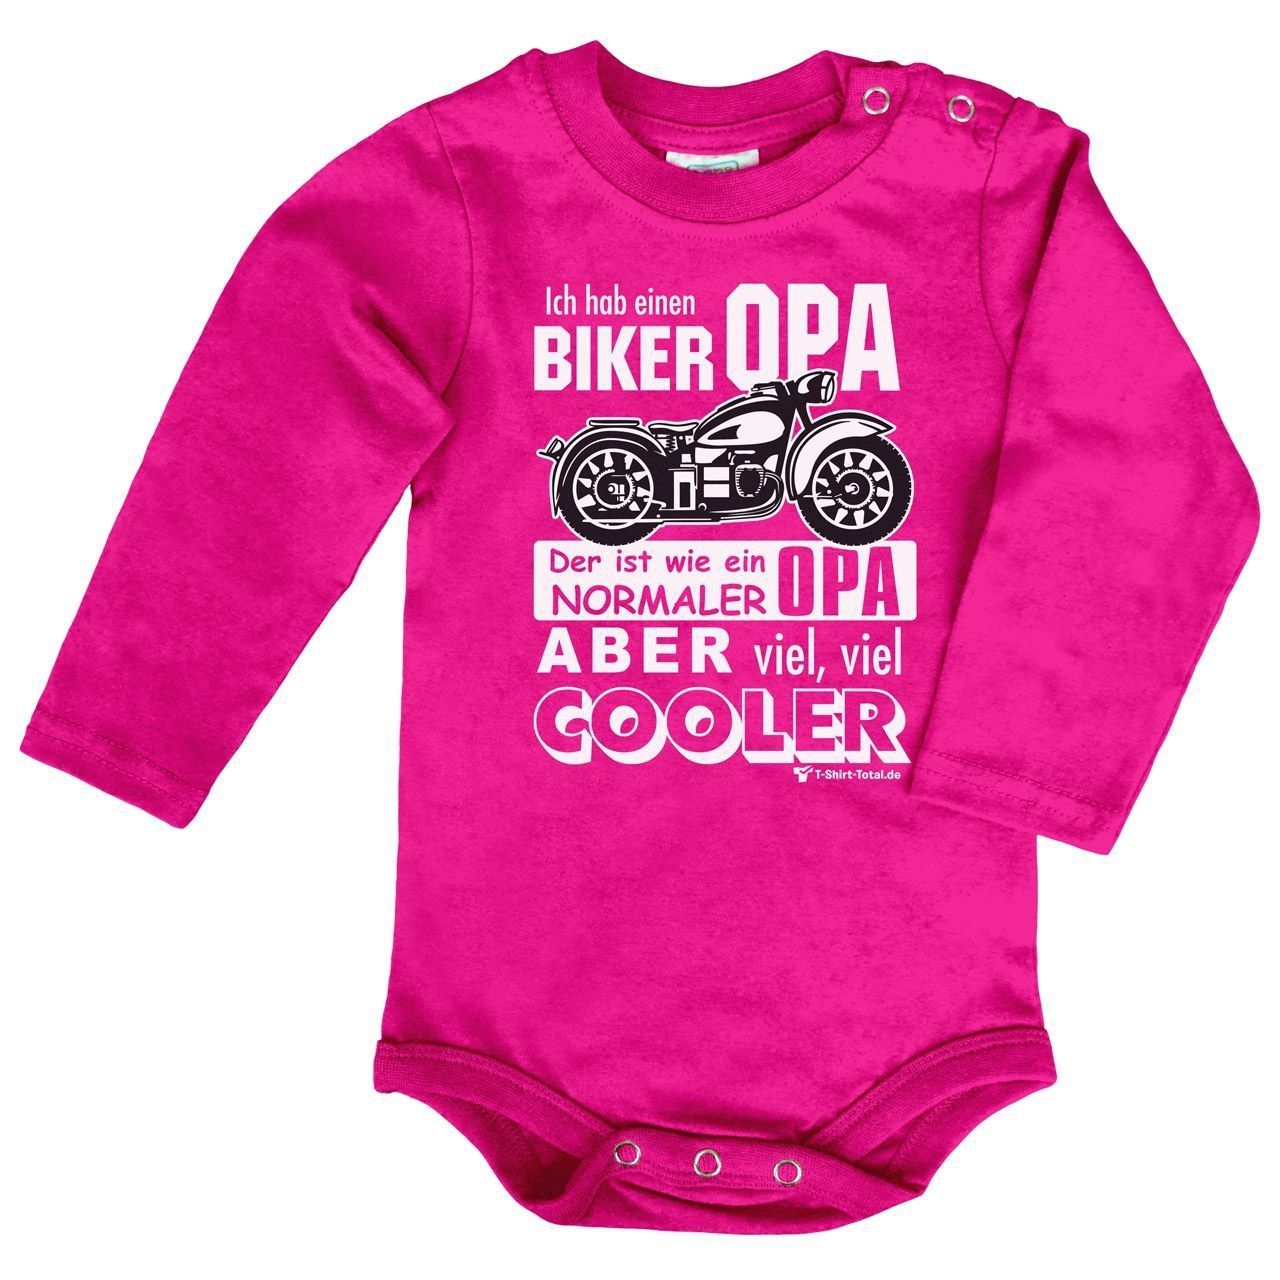 Biker Opa Baby Body Langarm pink 56 / 62